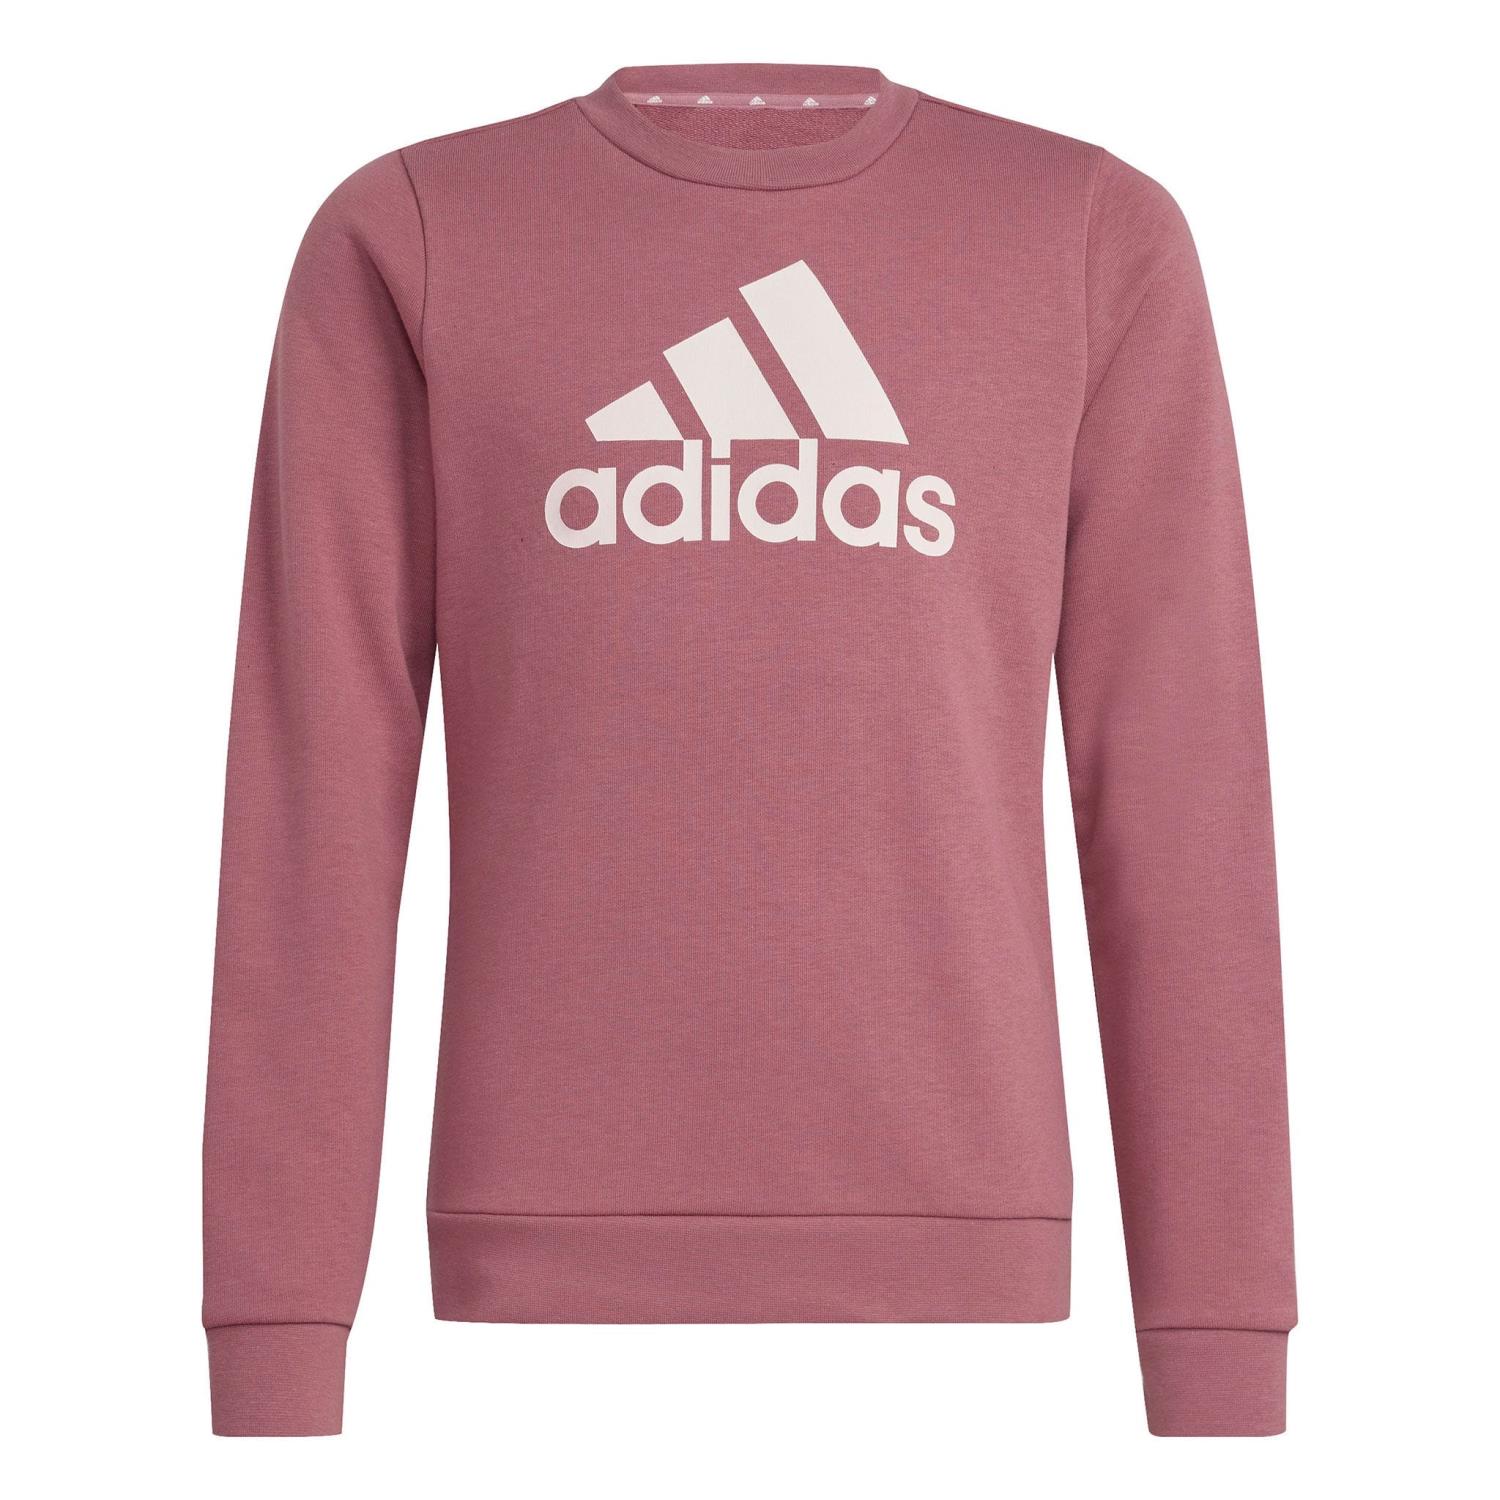 Adidas  Girls Big Logo Sweatshirt